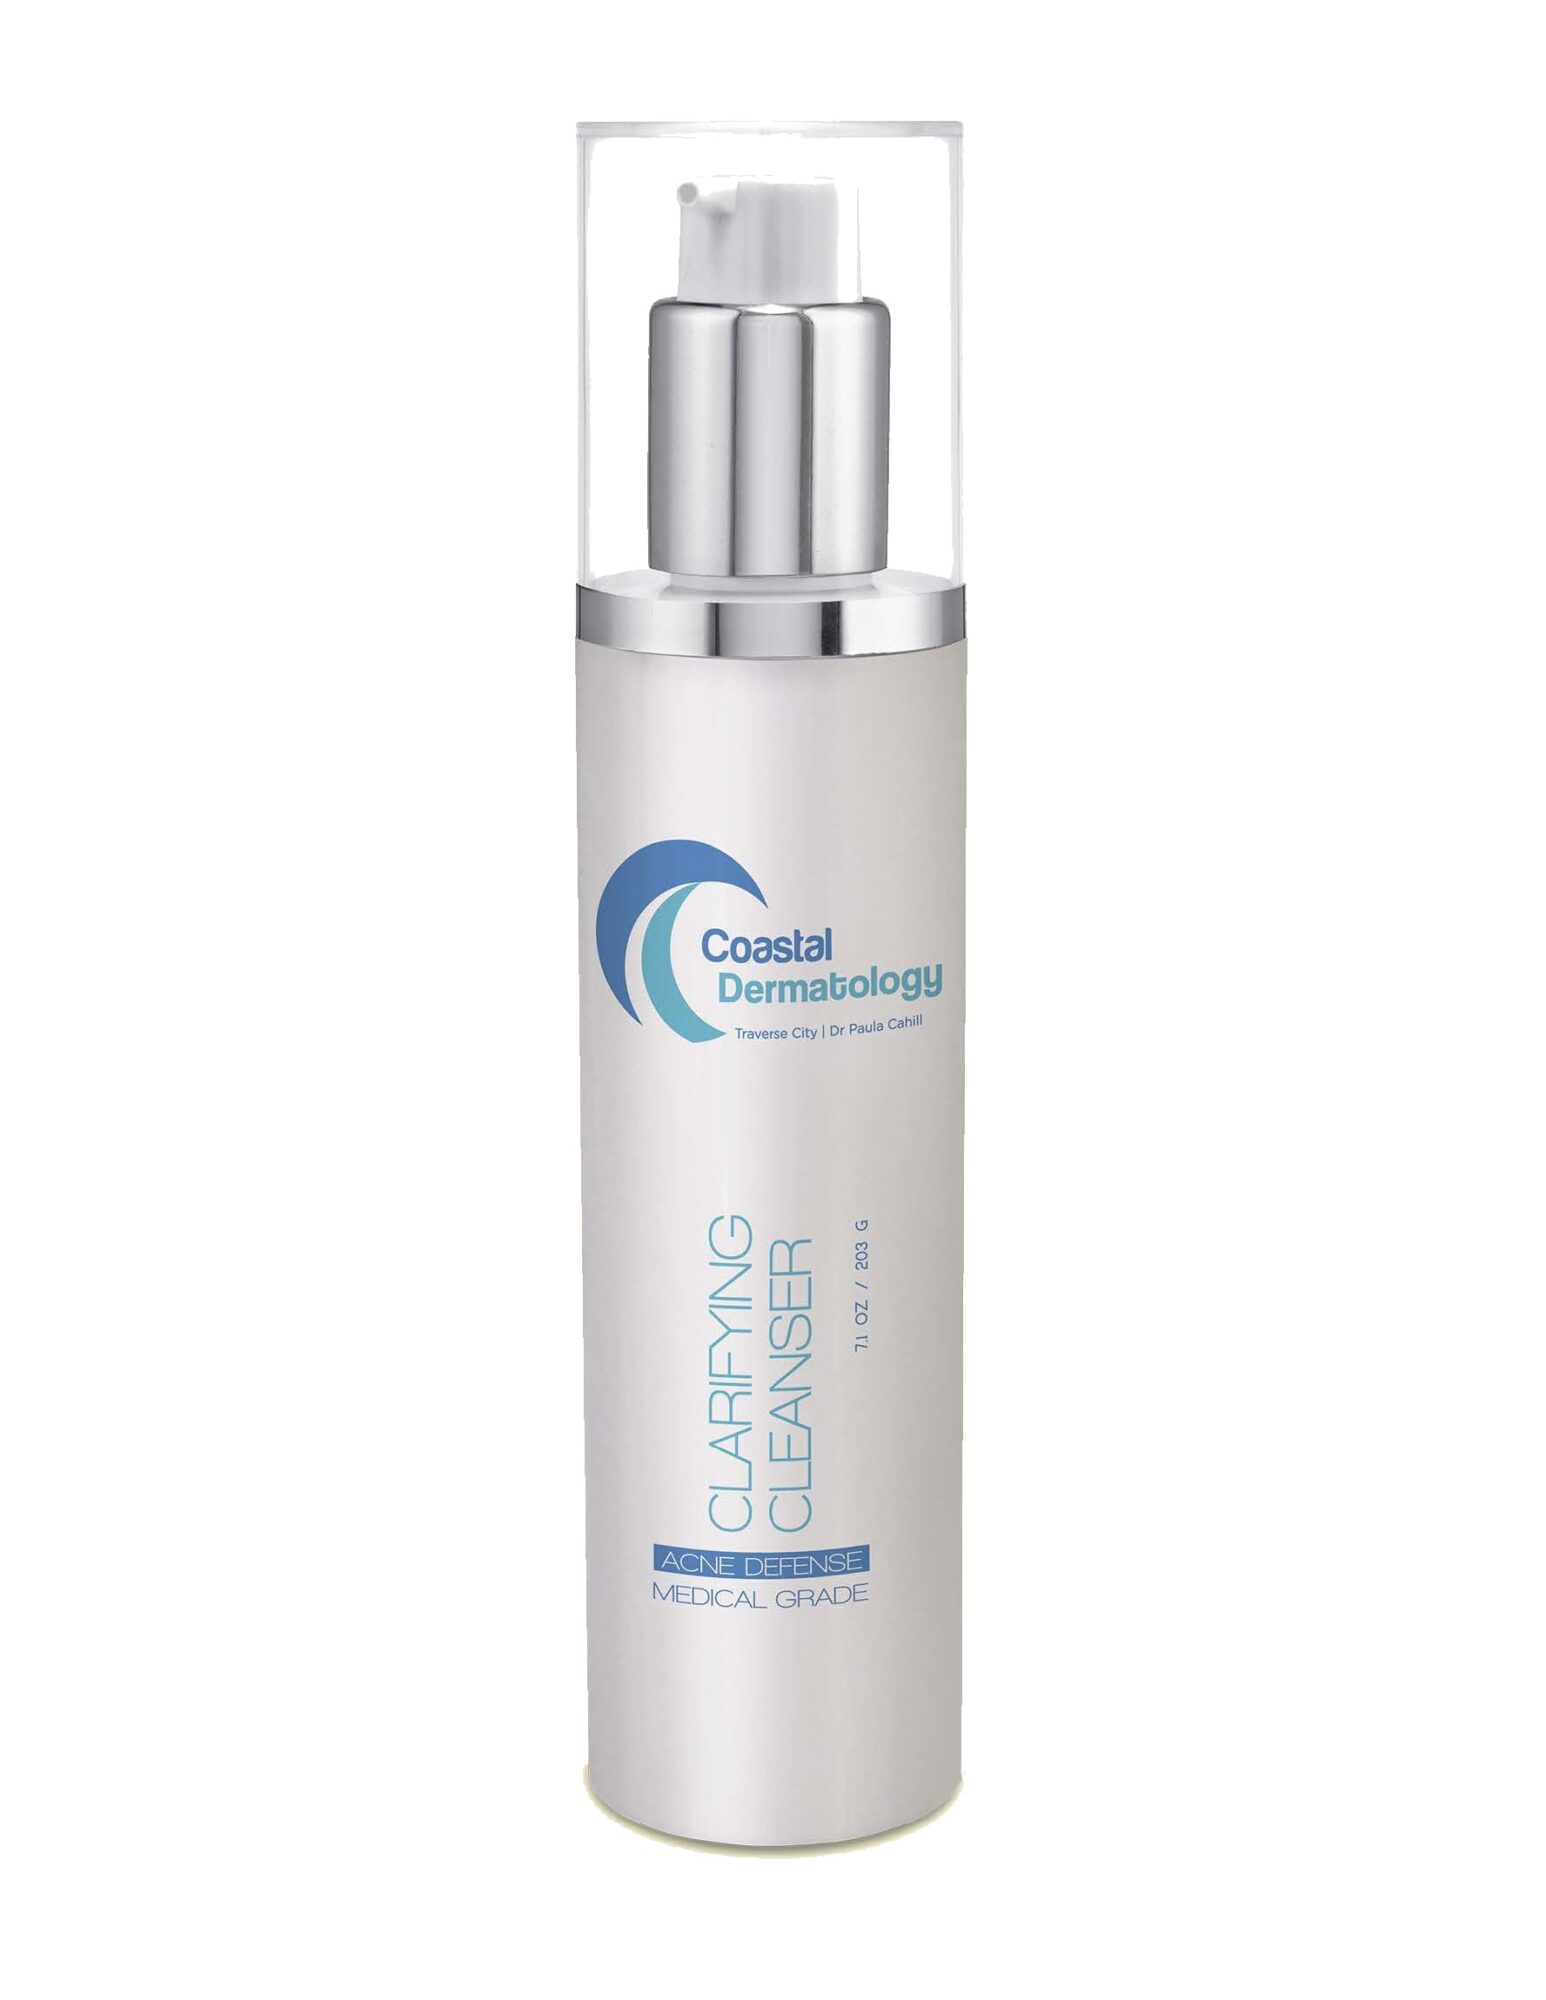 clarifying cleanser skincare product by coastal dermatology